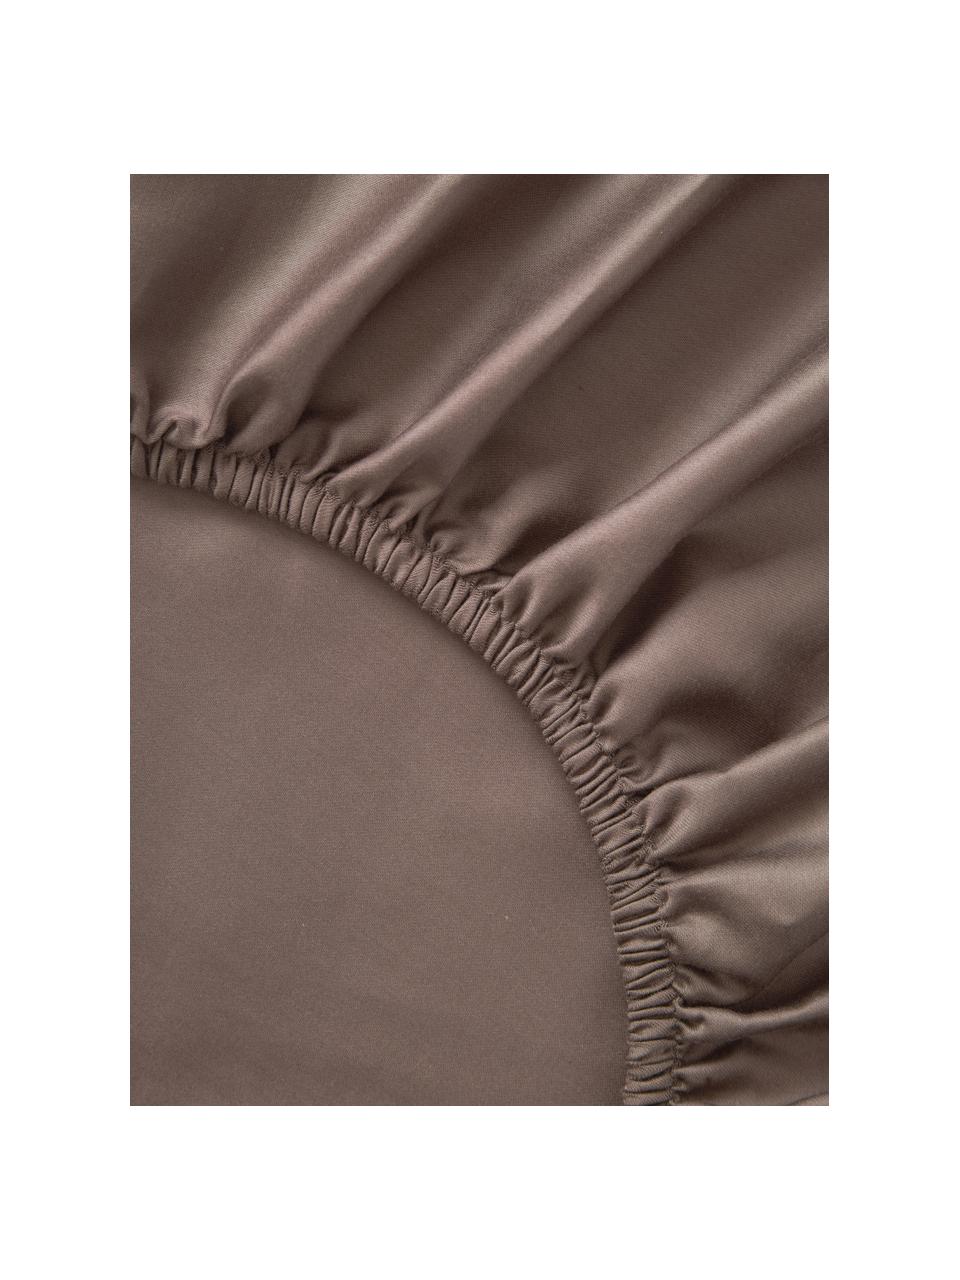 Sábana bajera de satén Comfort, Marrón oscuro, Cama 90 cm (90 x 200 x 35 cm)